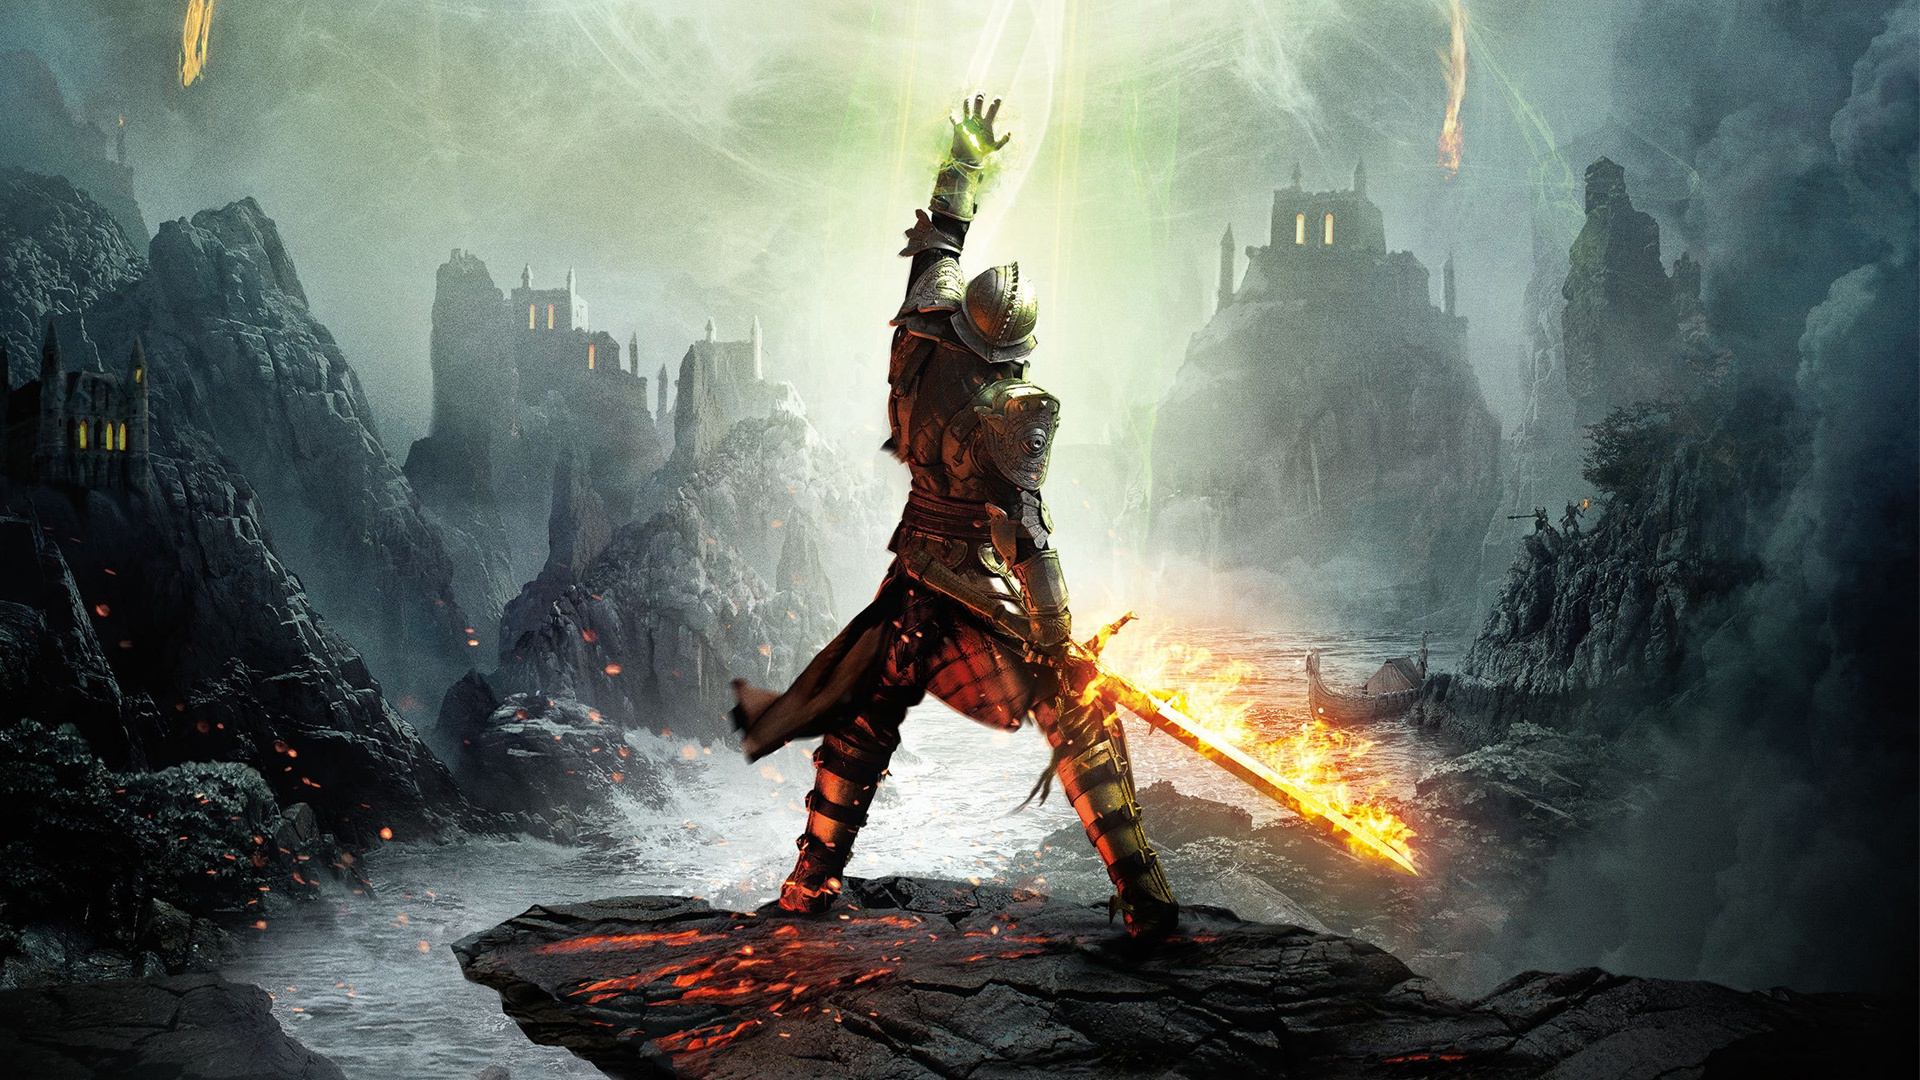 BioWare Releases New Dragon Age Inquisition Trailer The